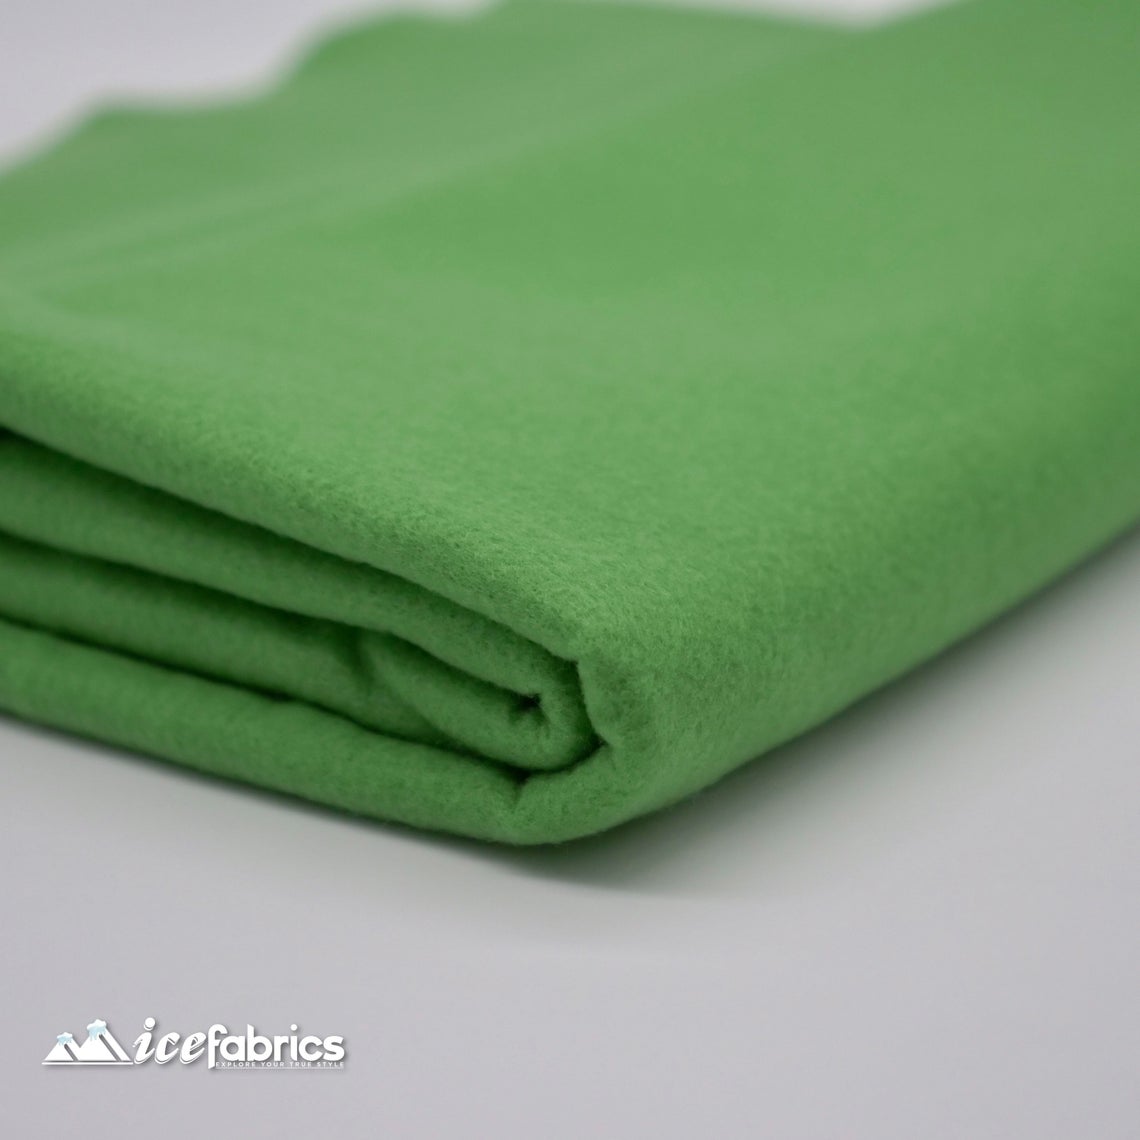 72" Wide 1.6 mm Thick Acrylic Lime Green Felt Fabric By The YardICE FABRICSICE FABRICSPer Yard1.6mm Thick72" Wide 1.6 mm Thick Acrylic Lime Green Felt Fabric By The Yard ICE FABRICS